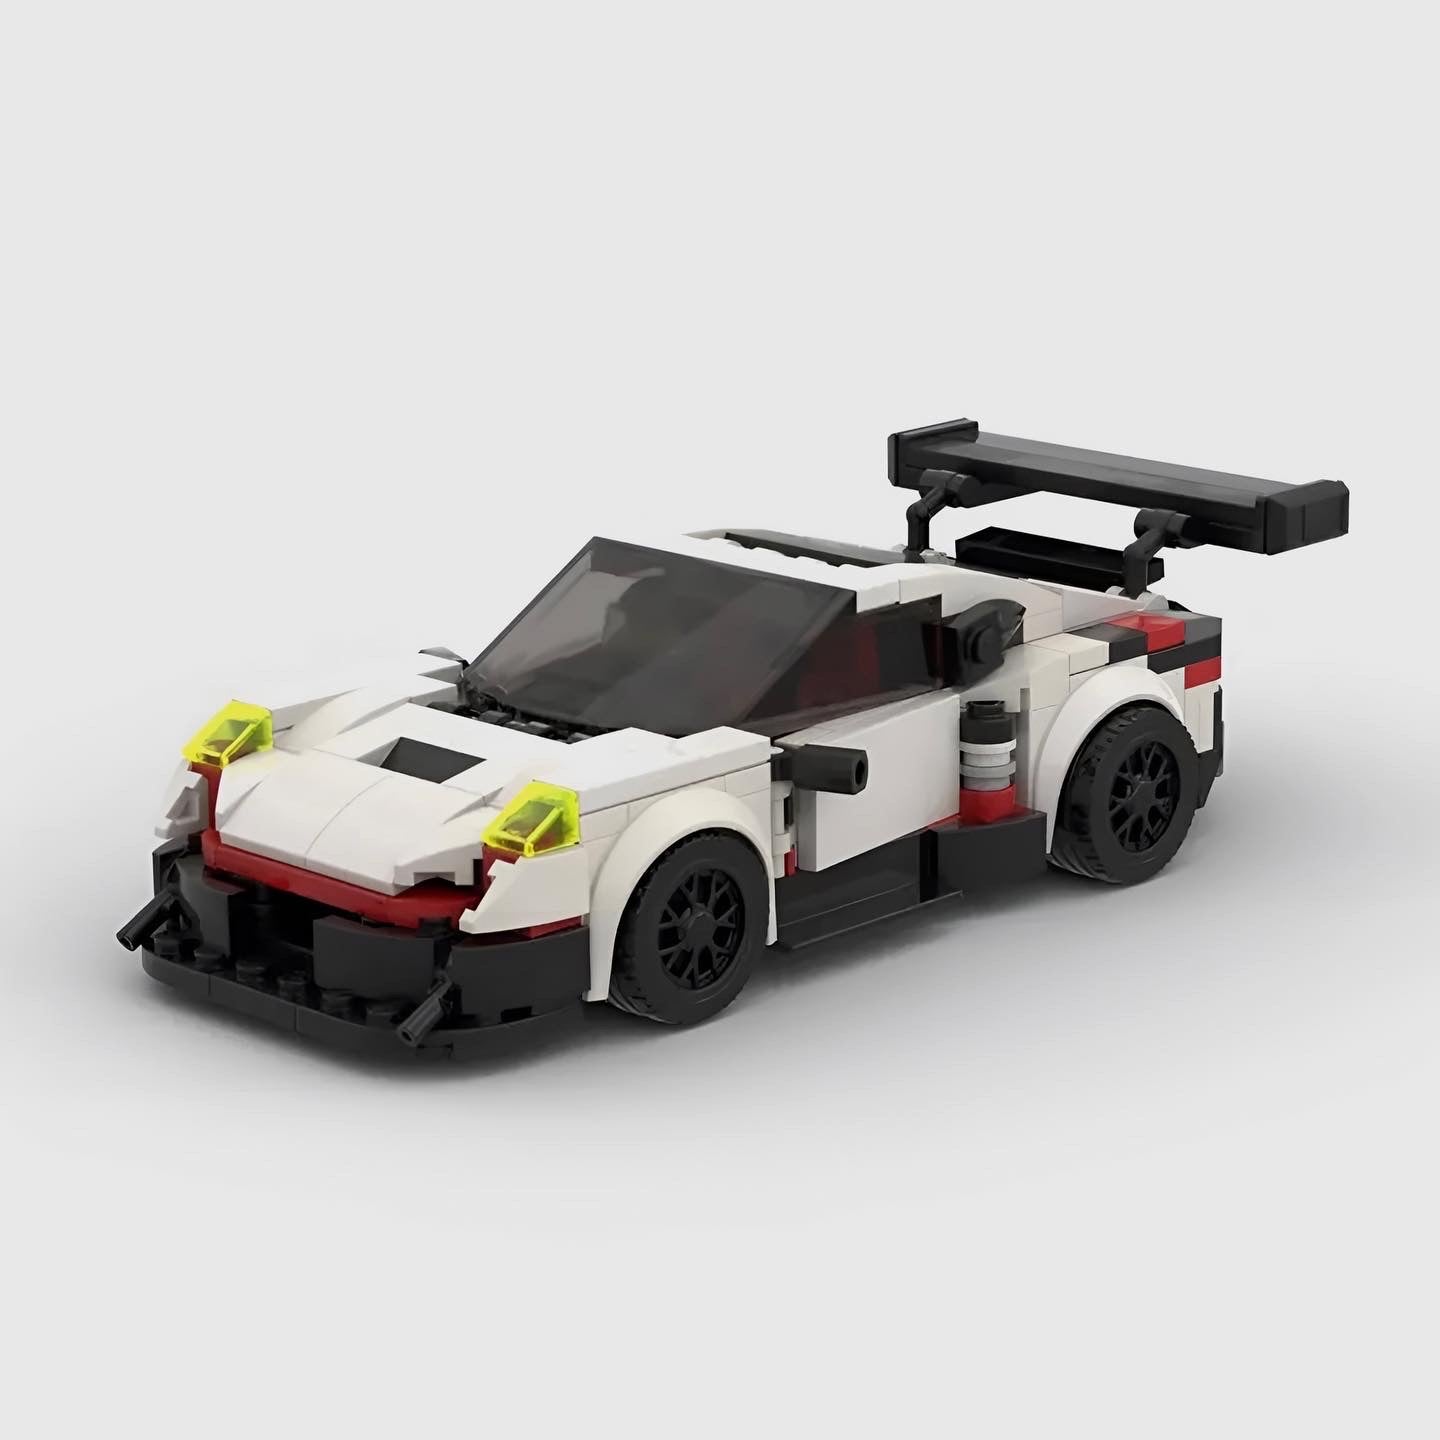 Lego's crazy-detailed Porsche 911 GT3 RS has moving engine parts